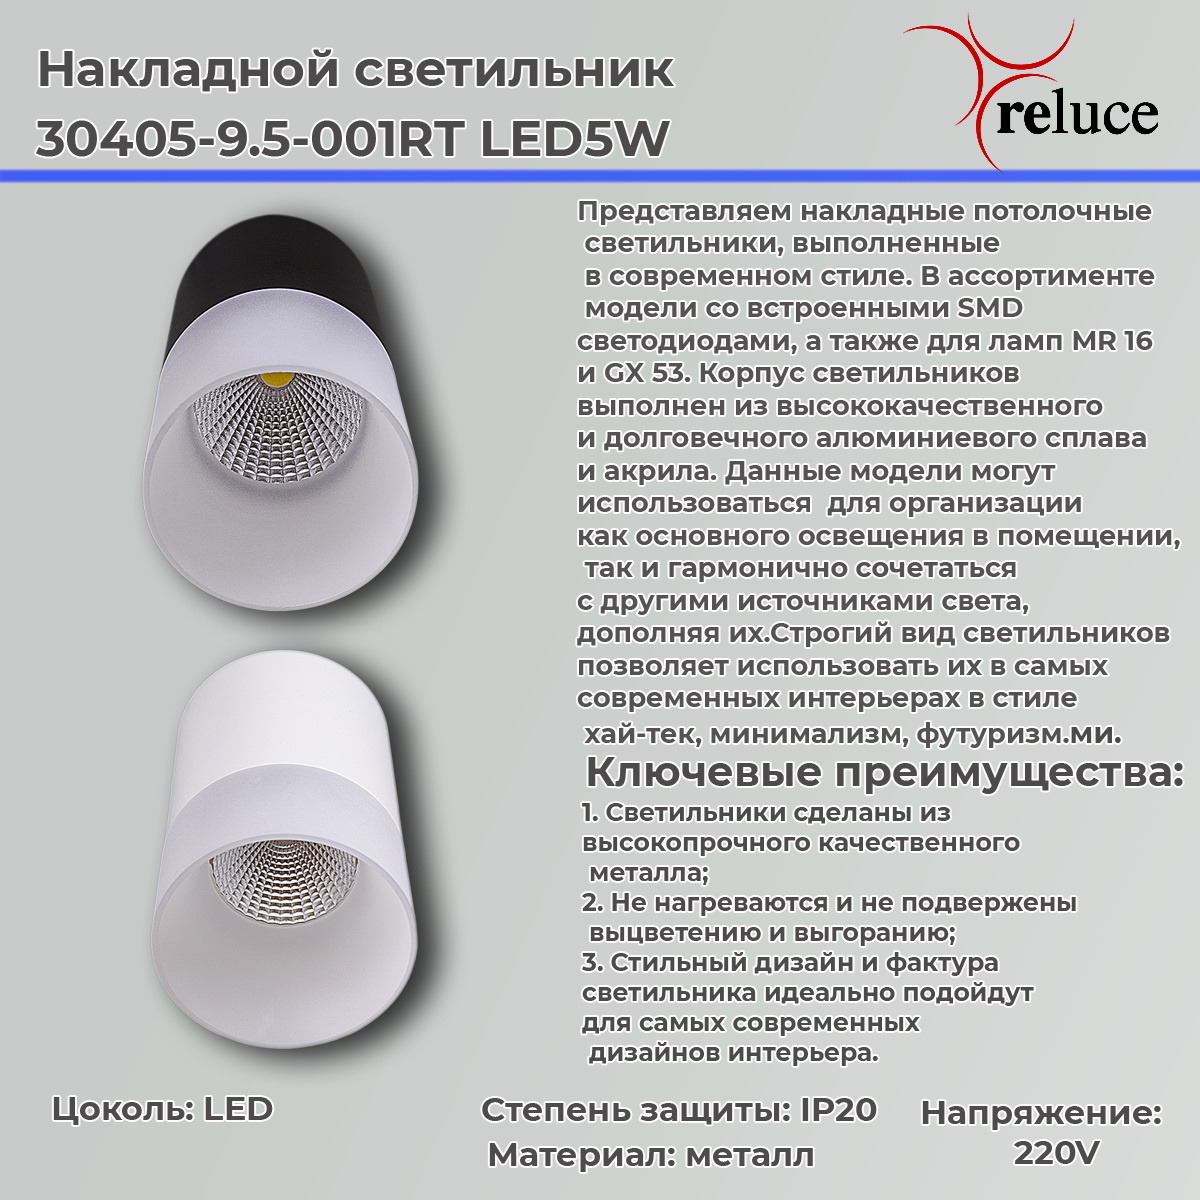 Накладной светильник Reluce 30405-9.5-001RT LED5W BK